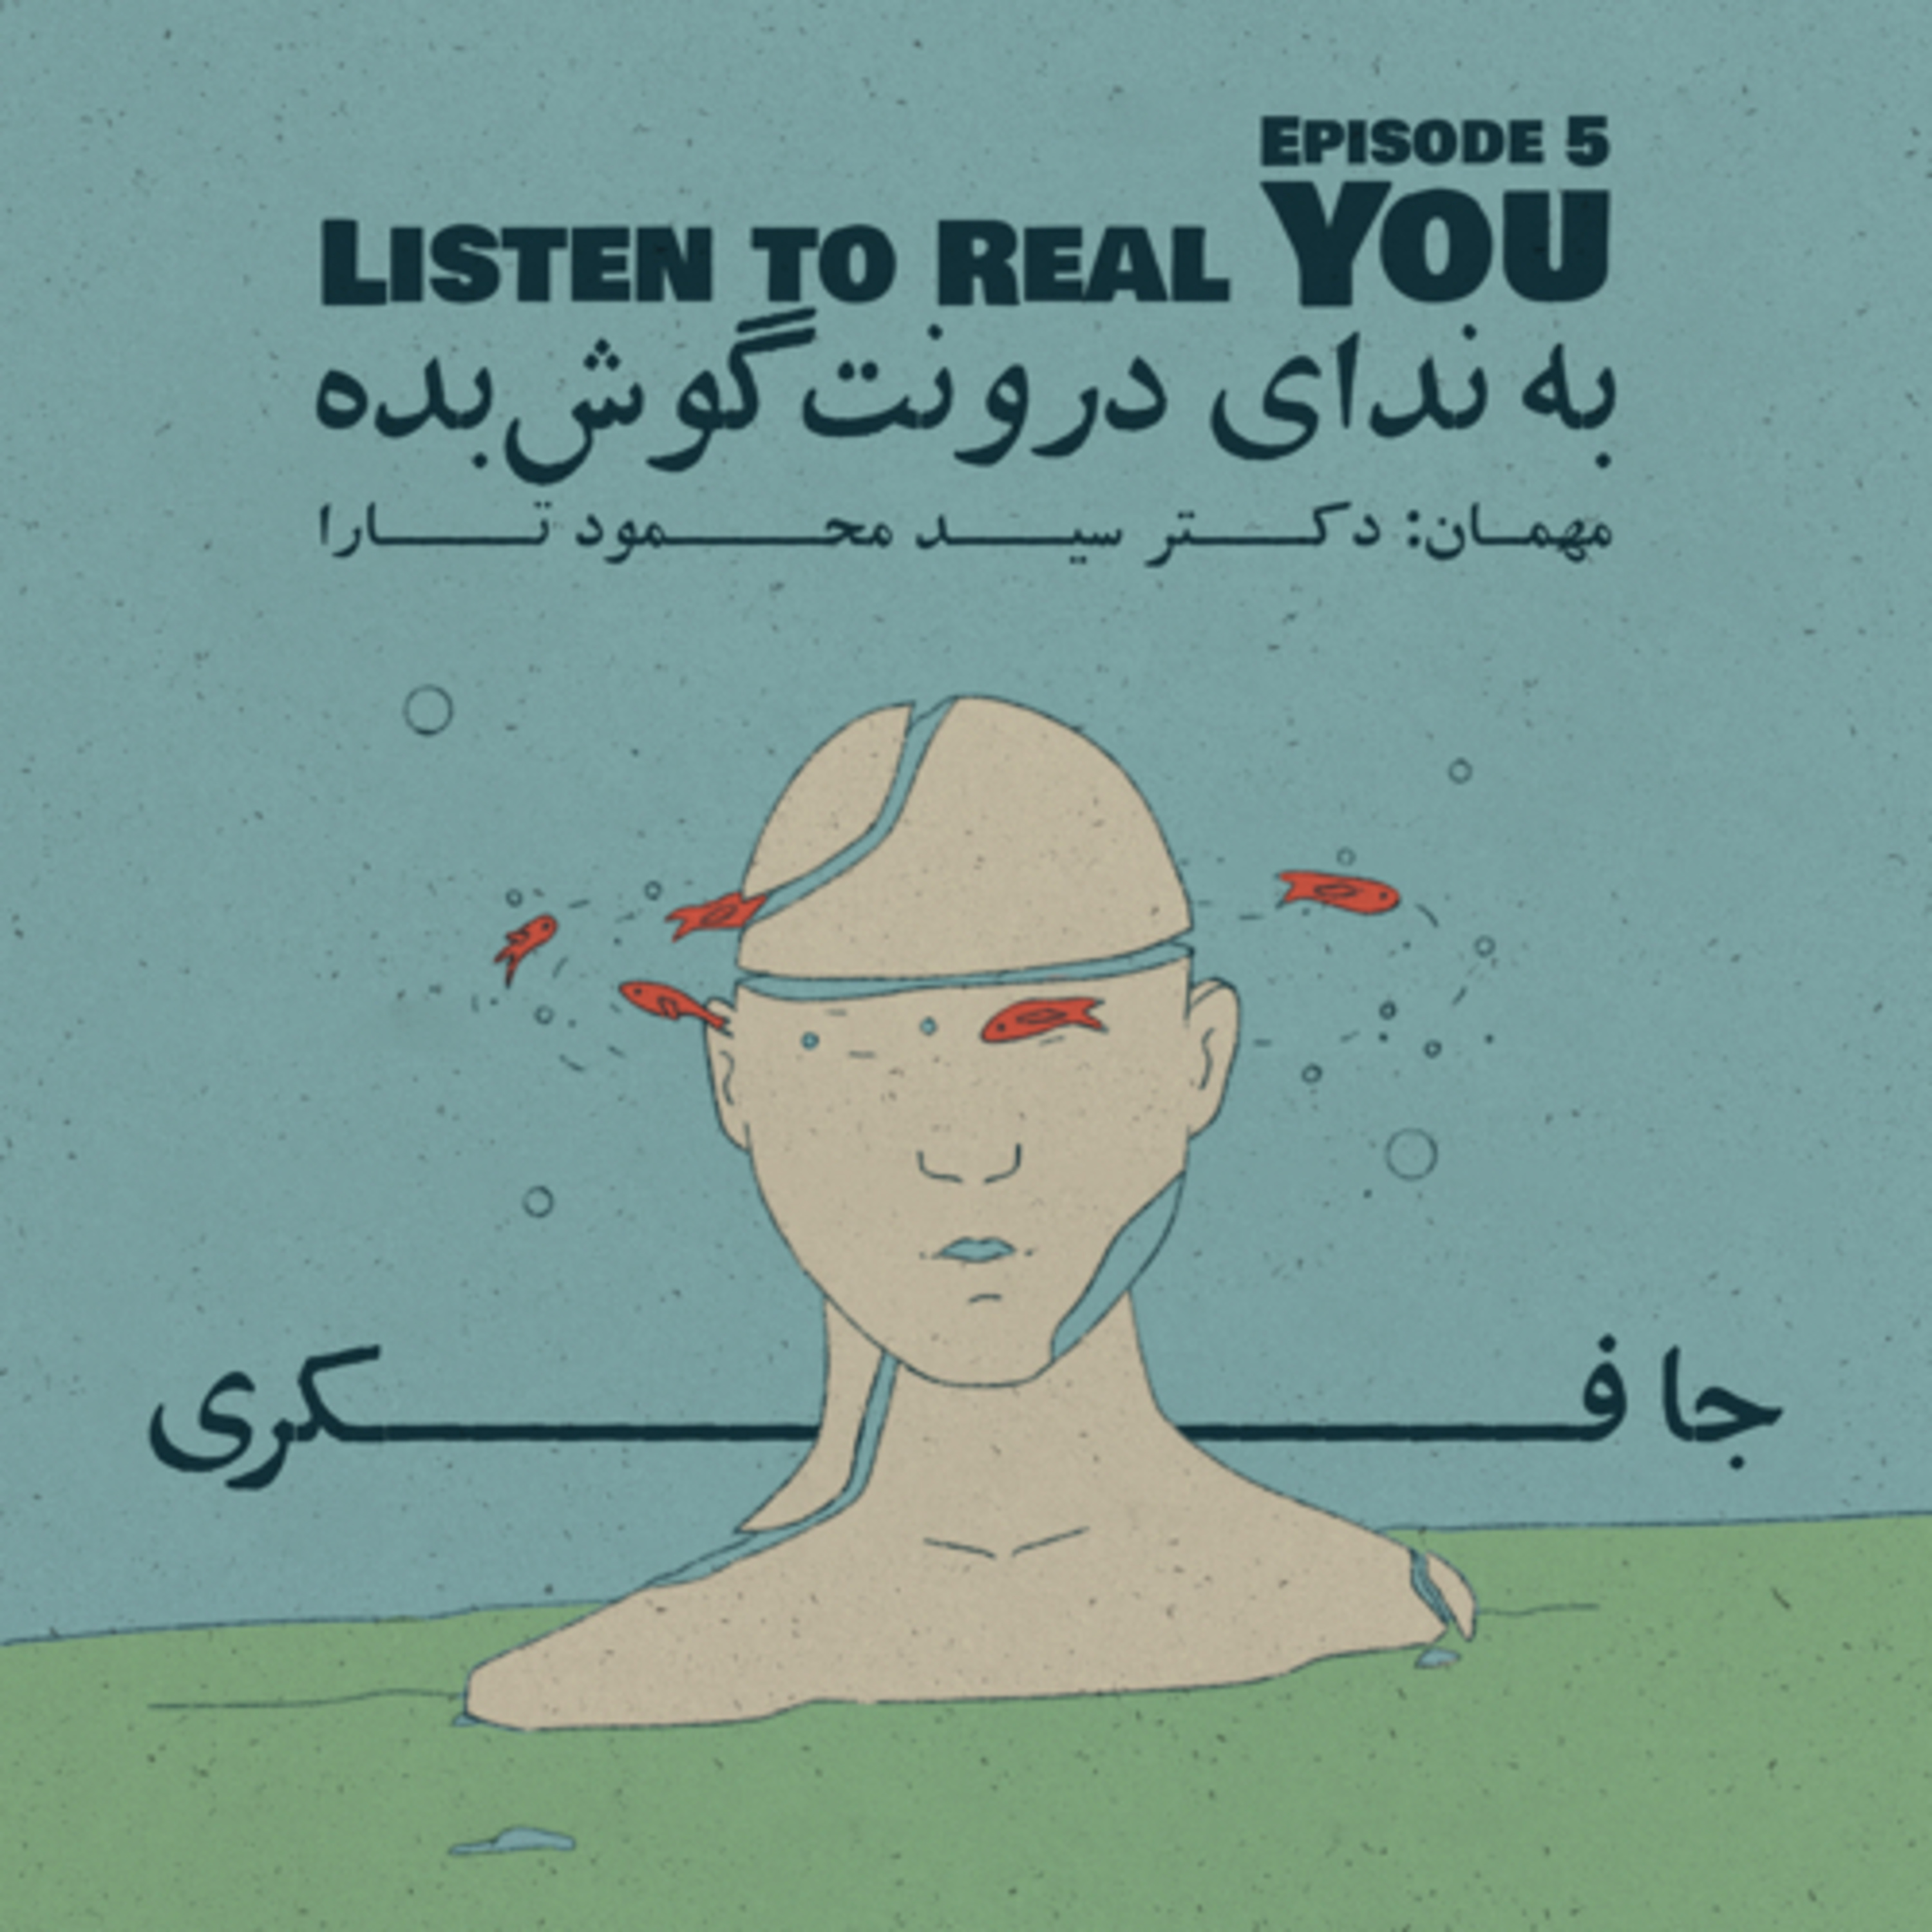 Episode 05 - Listen to Real You (به ندای درونت گوش بده)